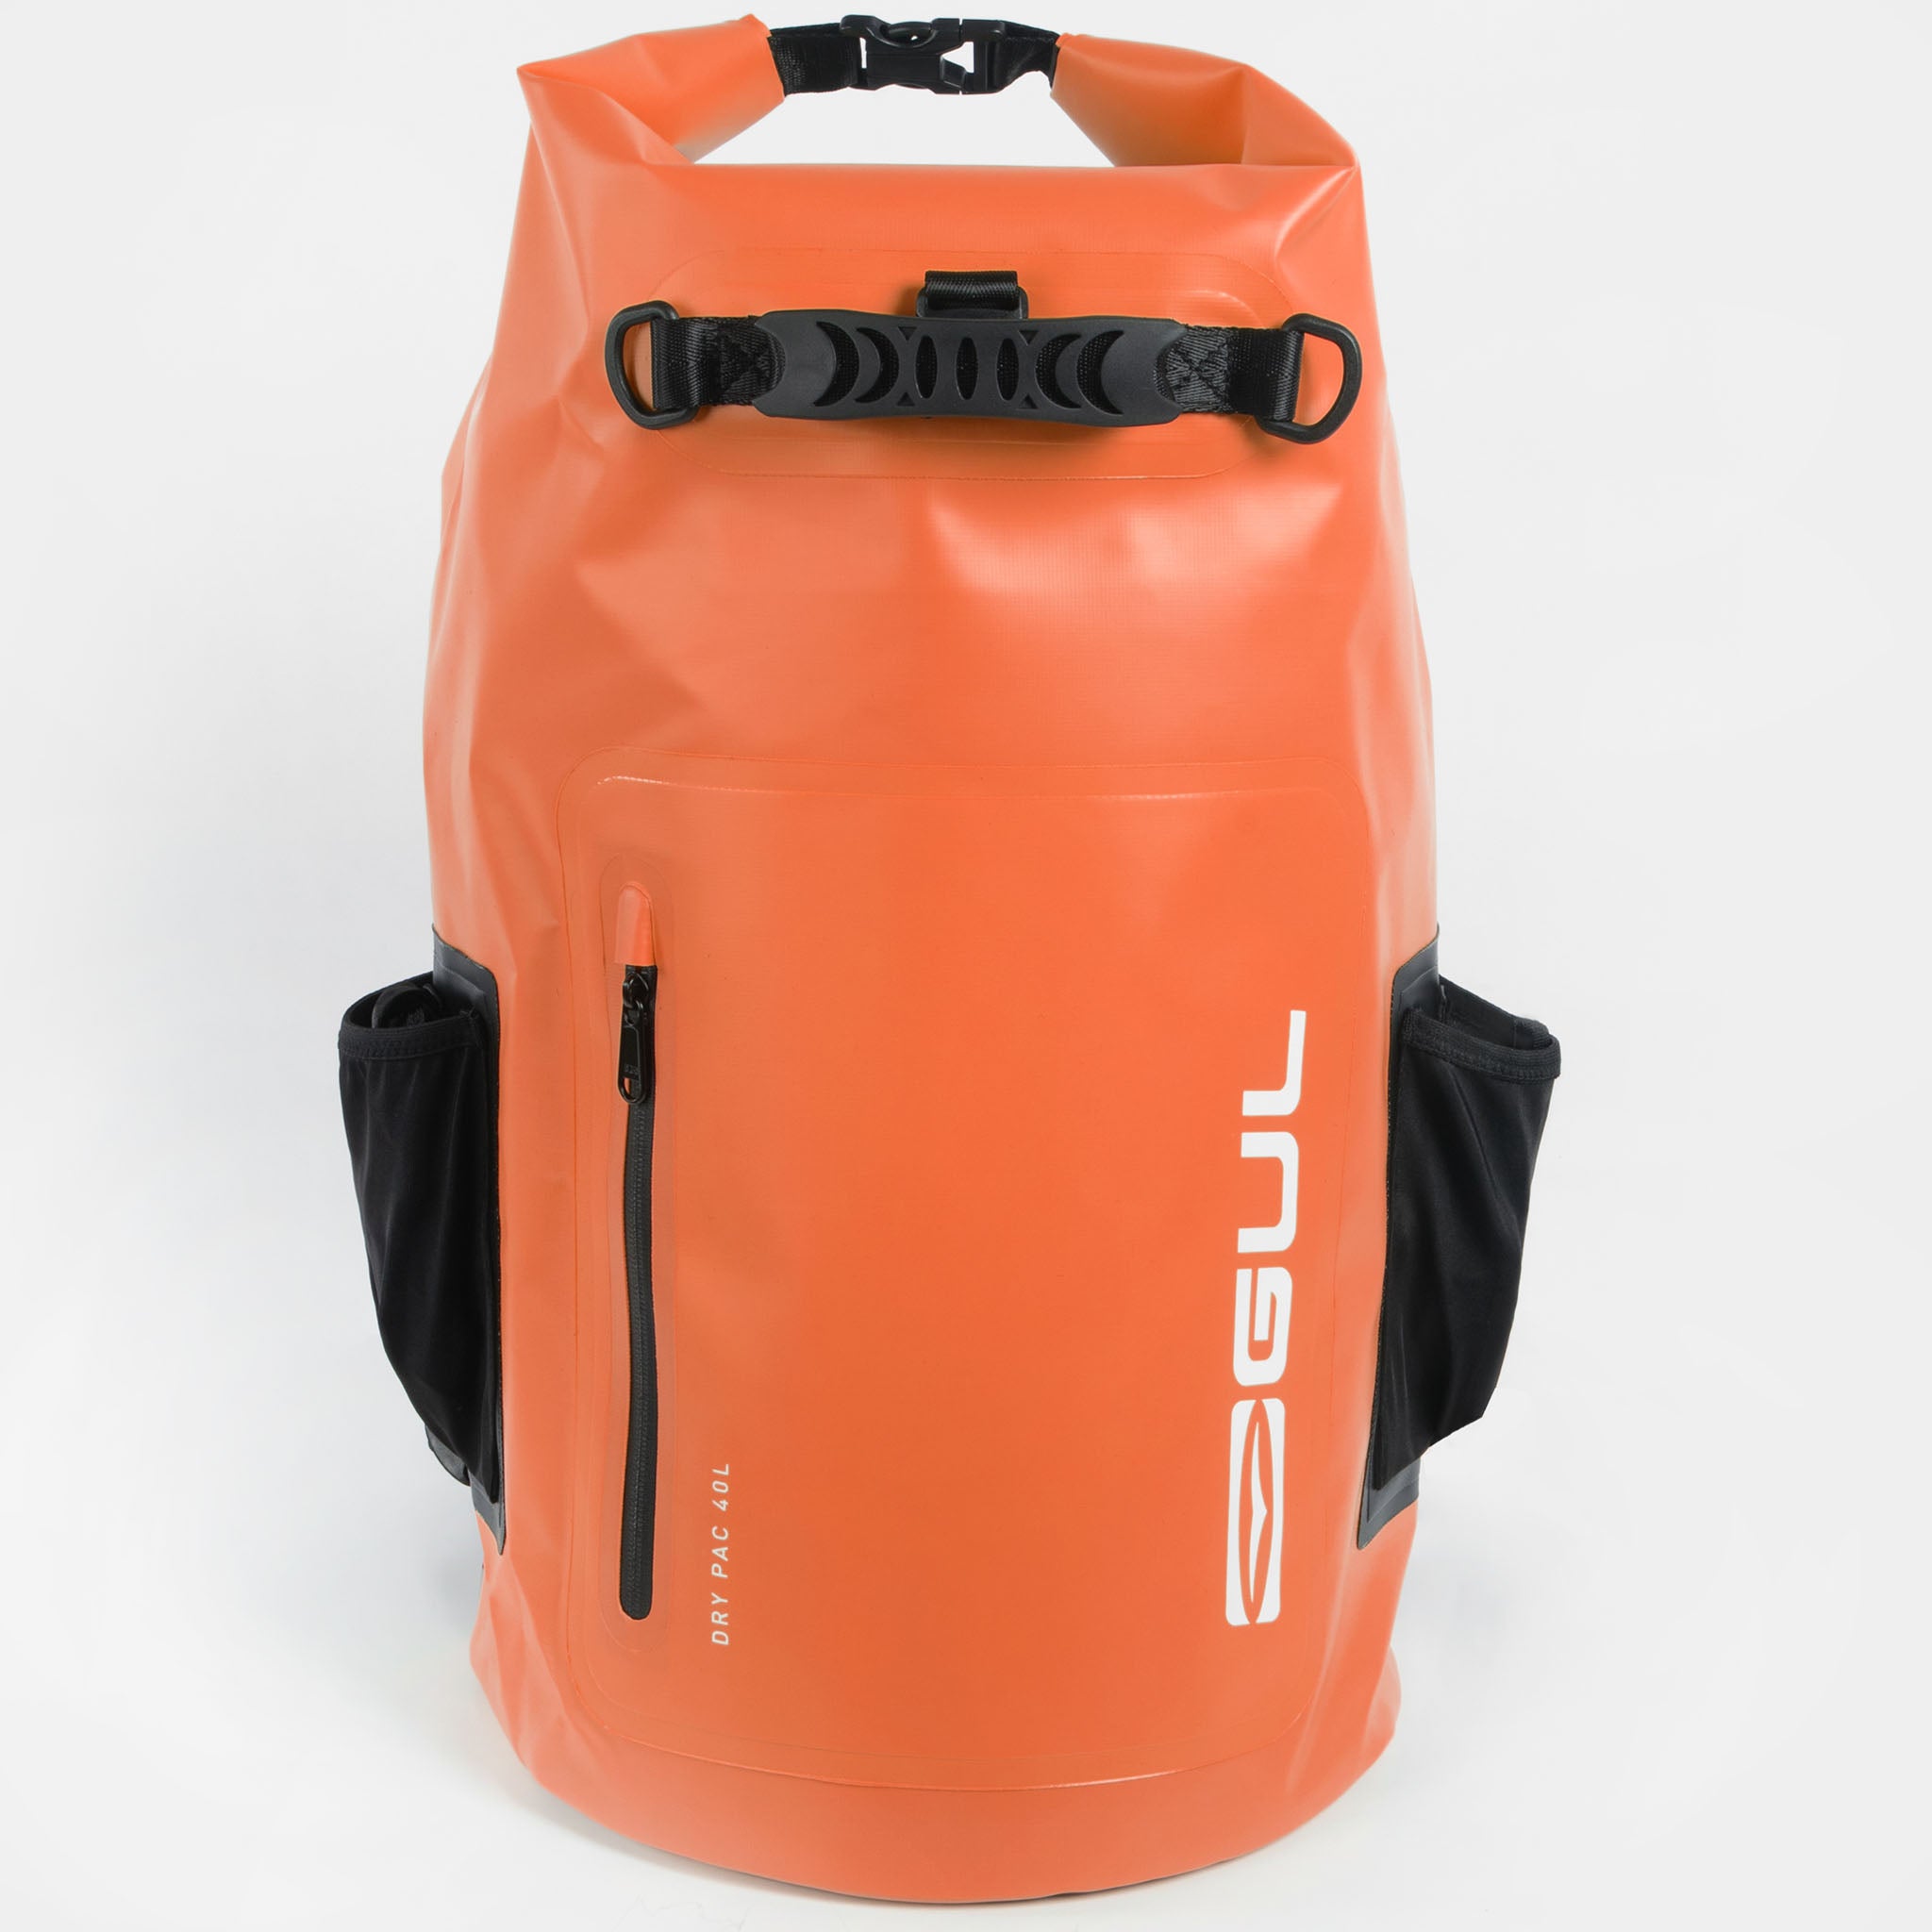 Gul 40L DryPac Back Pack - Orange